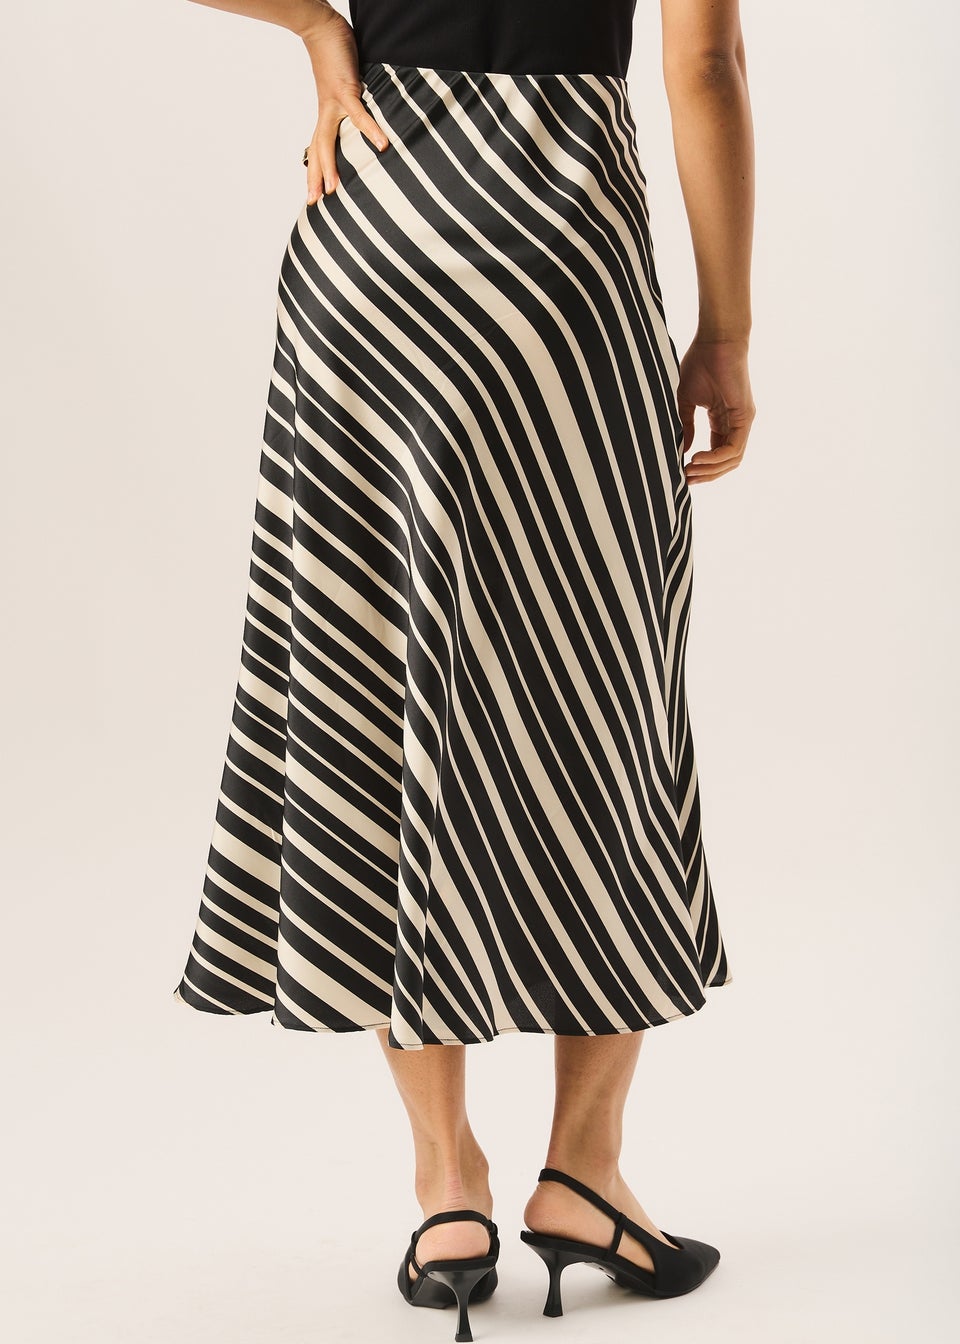 Gini London Black Bias Stripe Assymetric Skirt